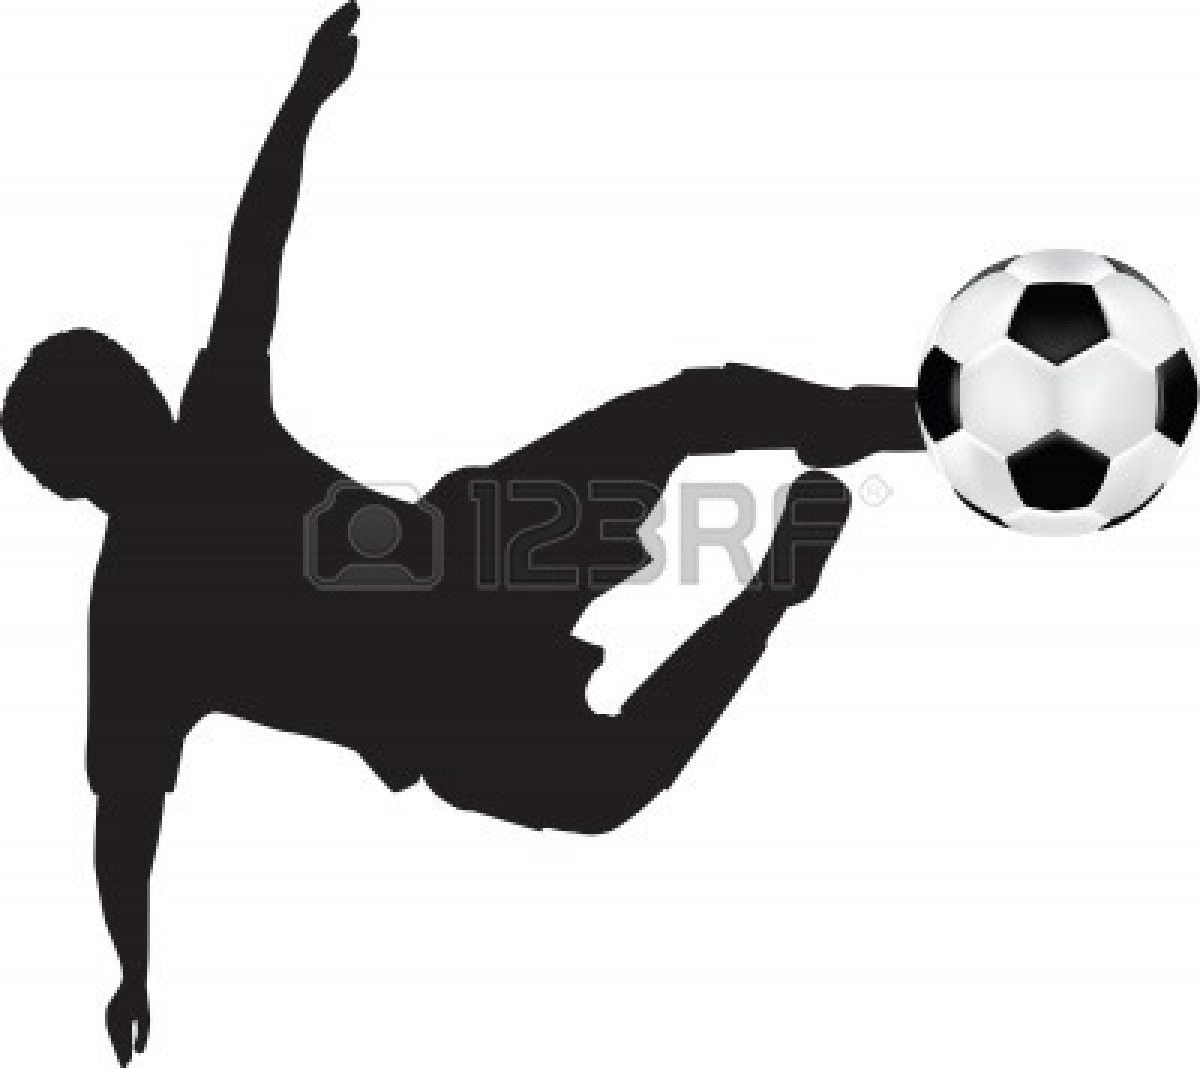 Silhouettes Girl Soccer Player Kicking Ball